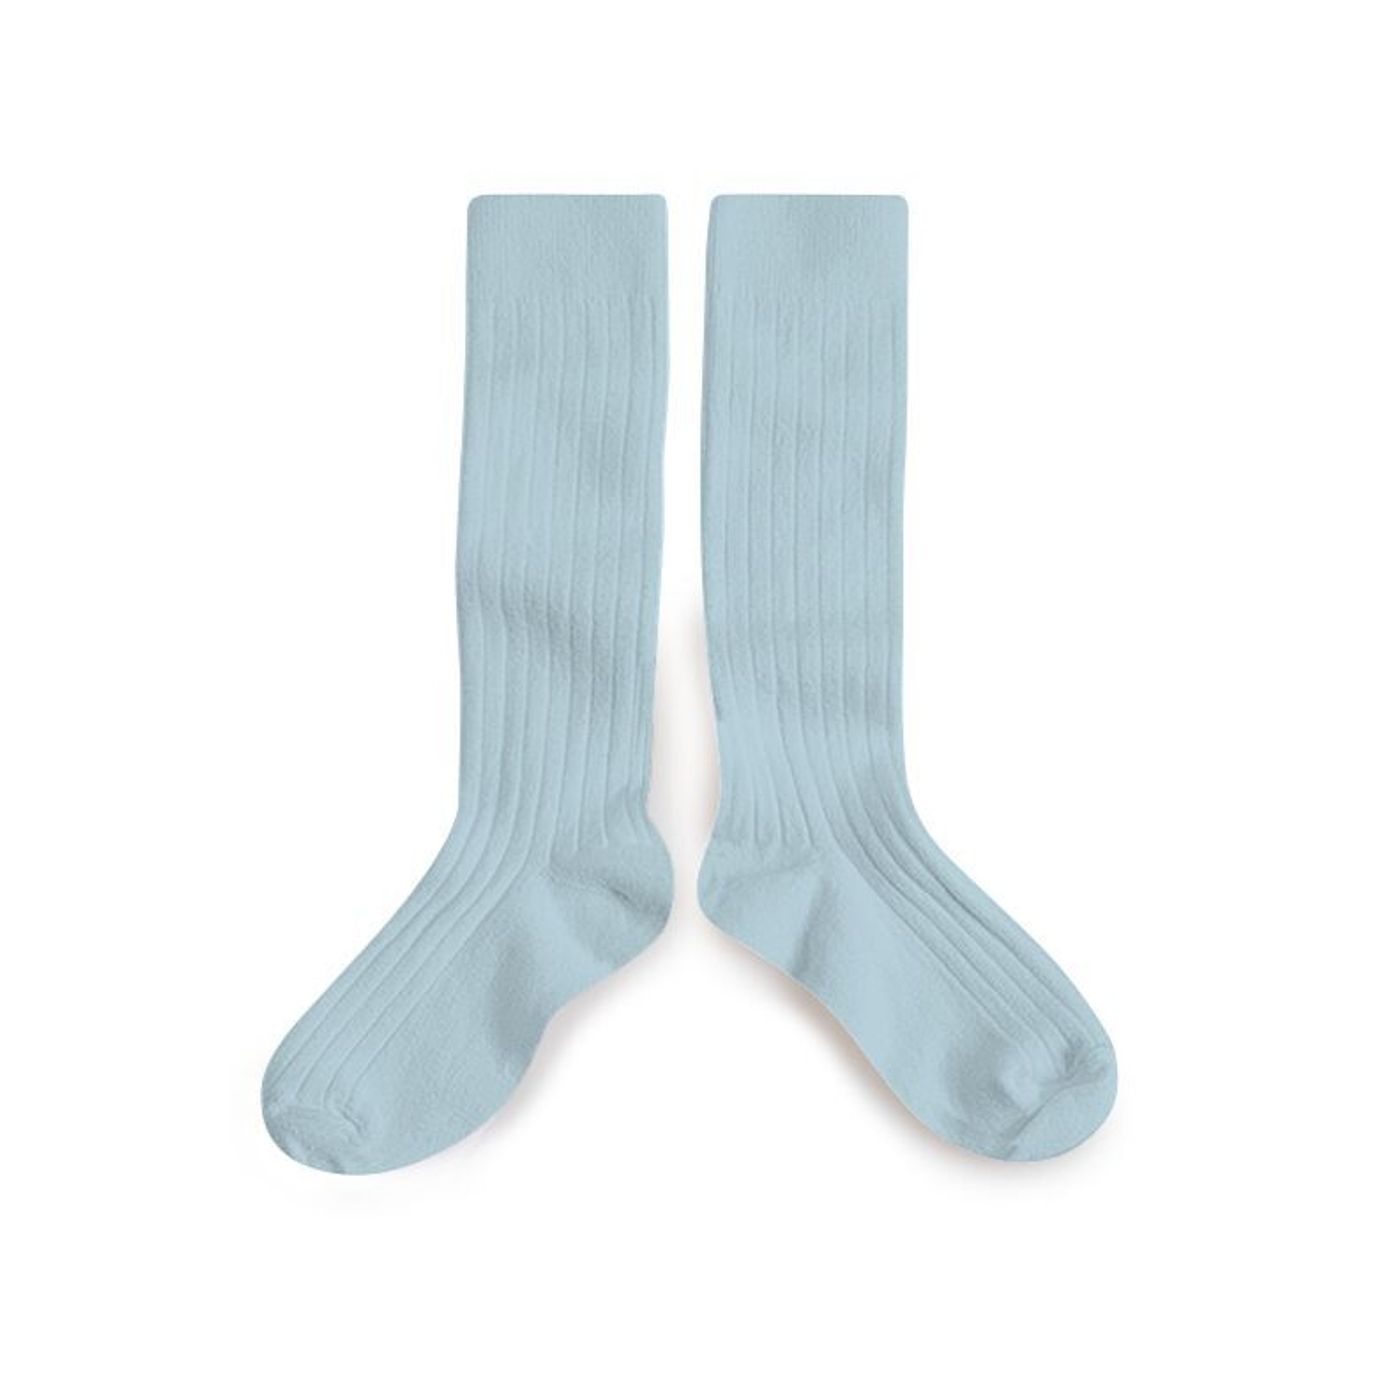 Collégien Knee high socks La Haute bleu de pastel 2950 132 La Haute 